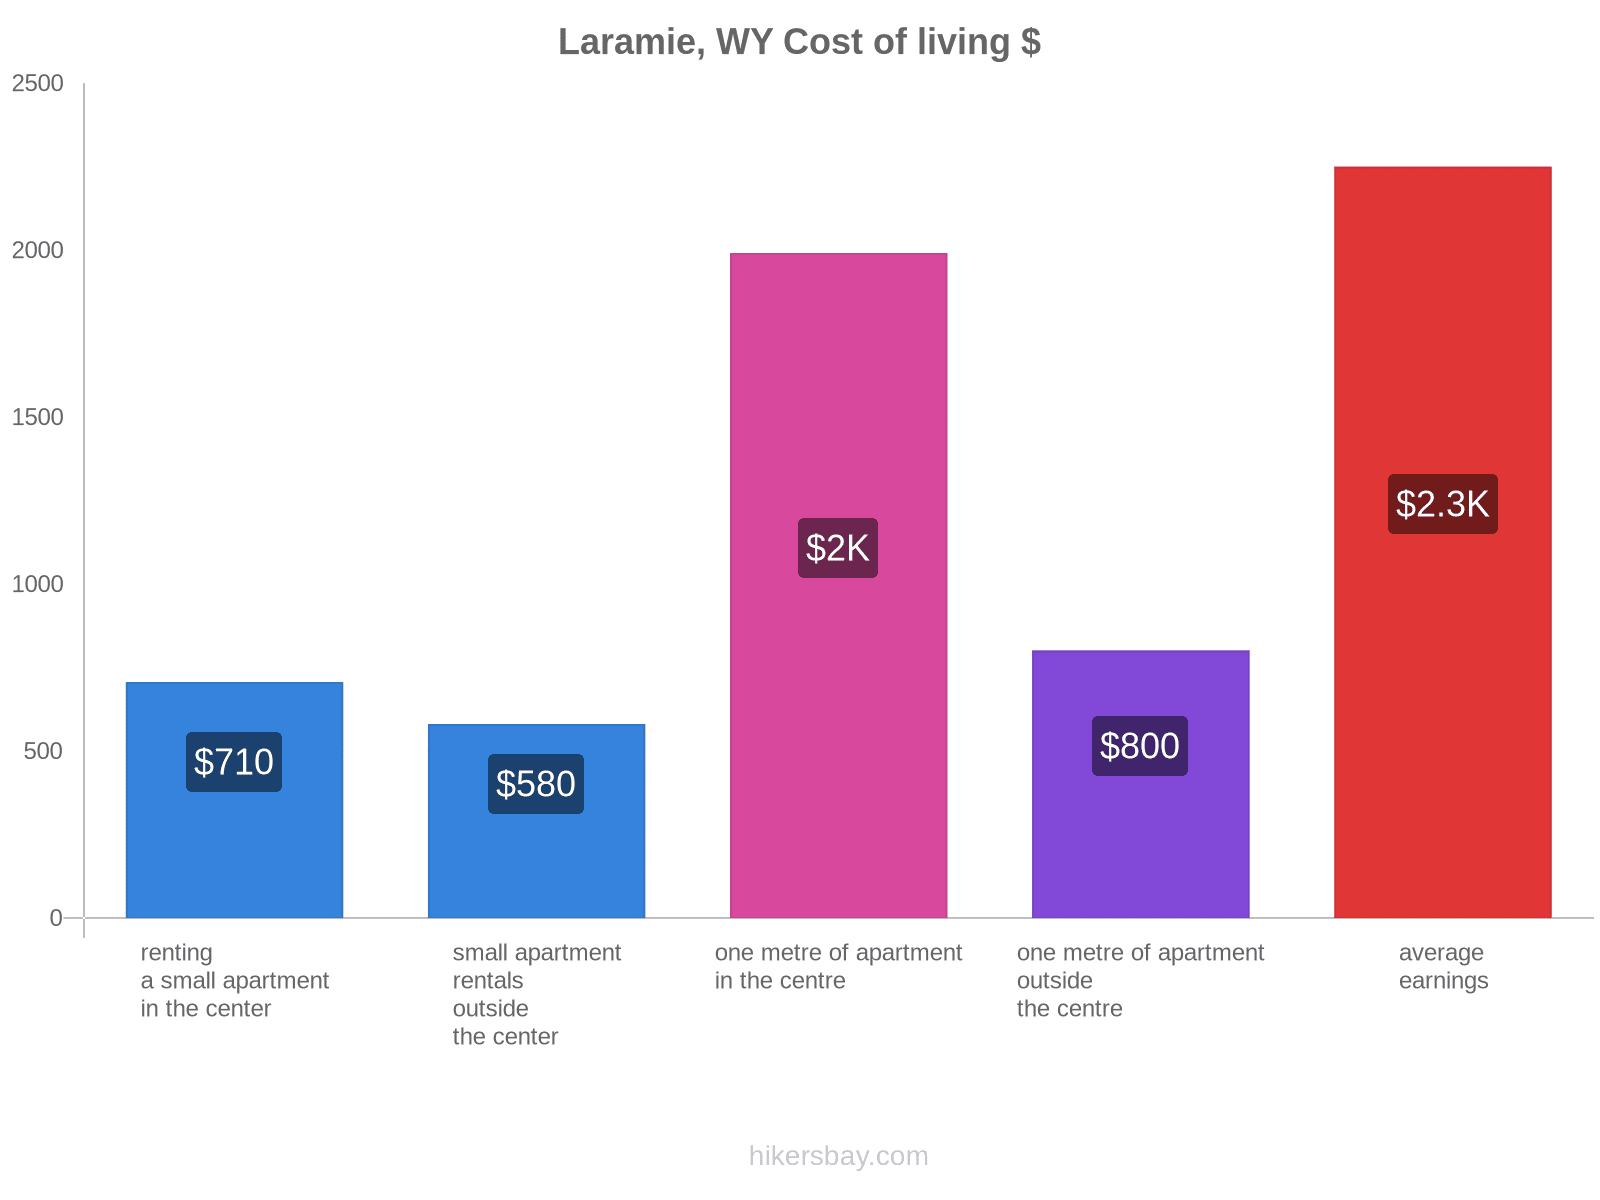 Laramie, WY cost of living hikersbay.com